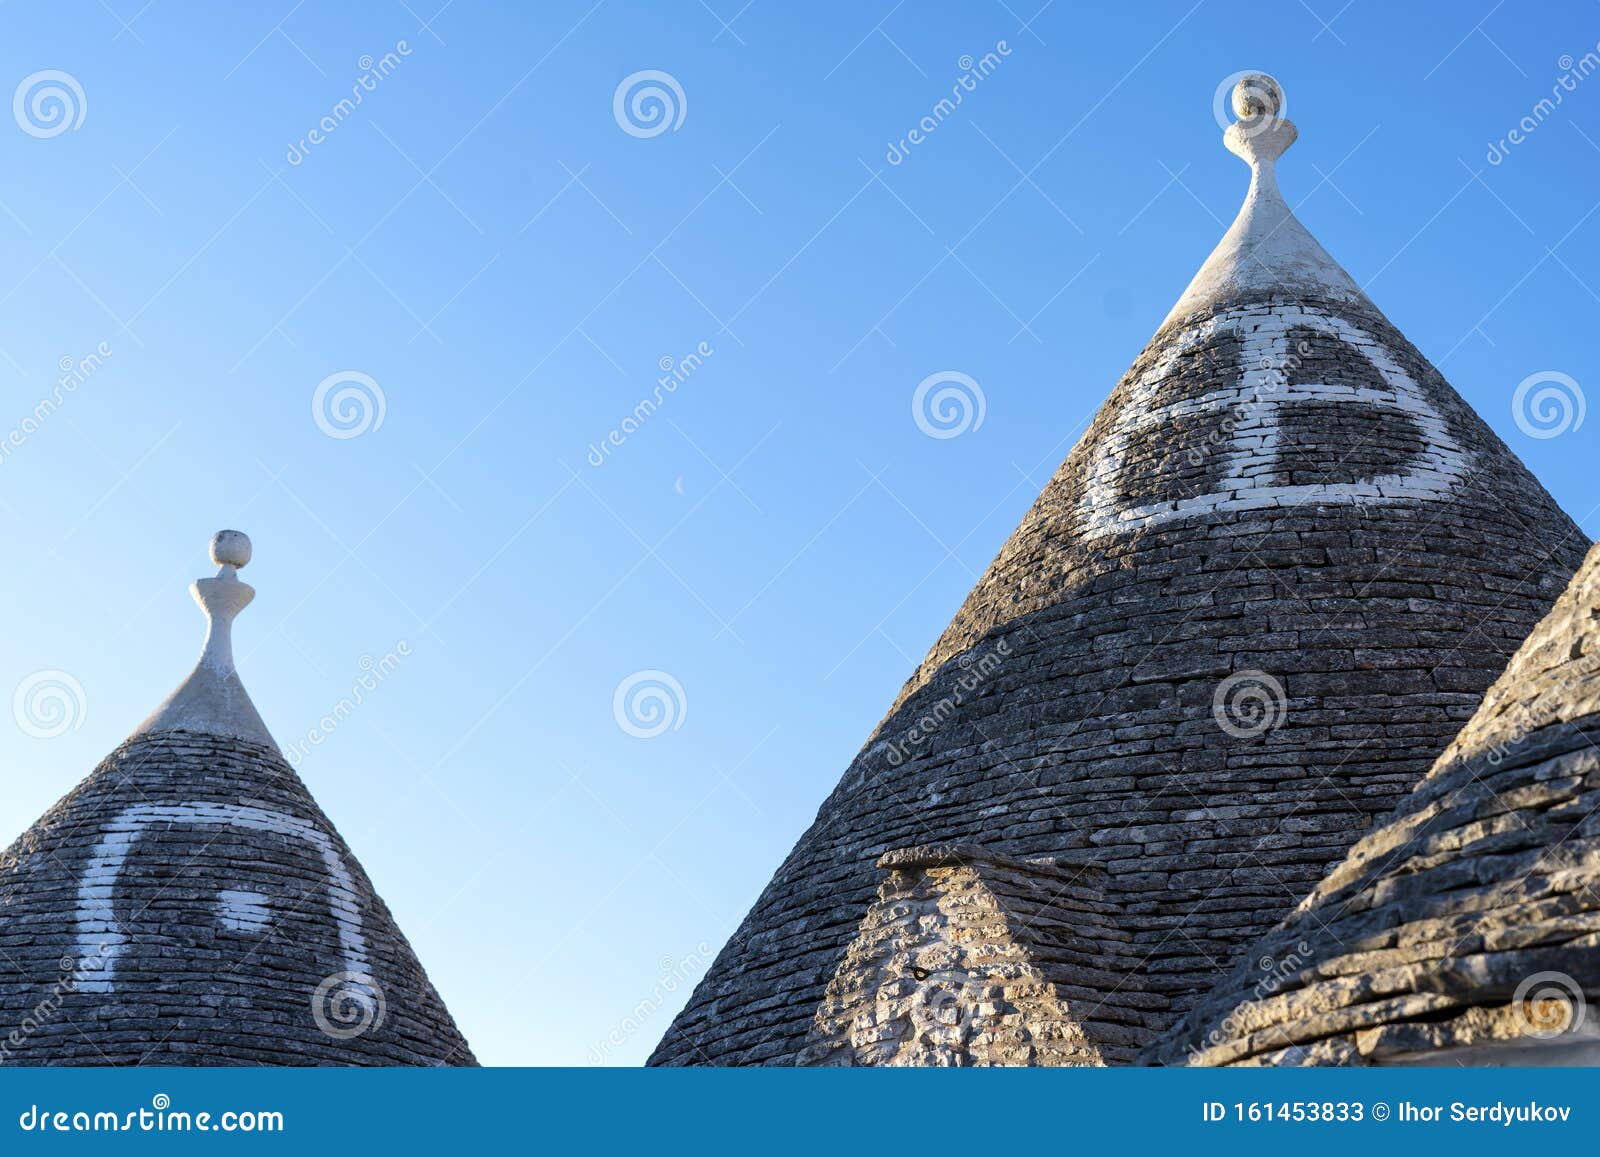 trulli of alberobello. view of trulli houses .the traditional trulli houses in alberobello city, puglia, italy - immagine